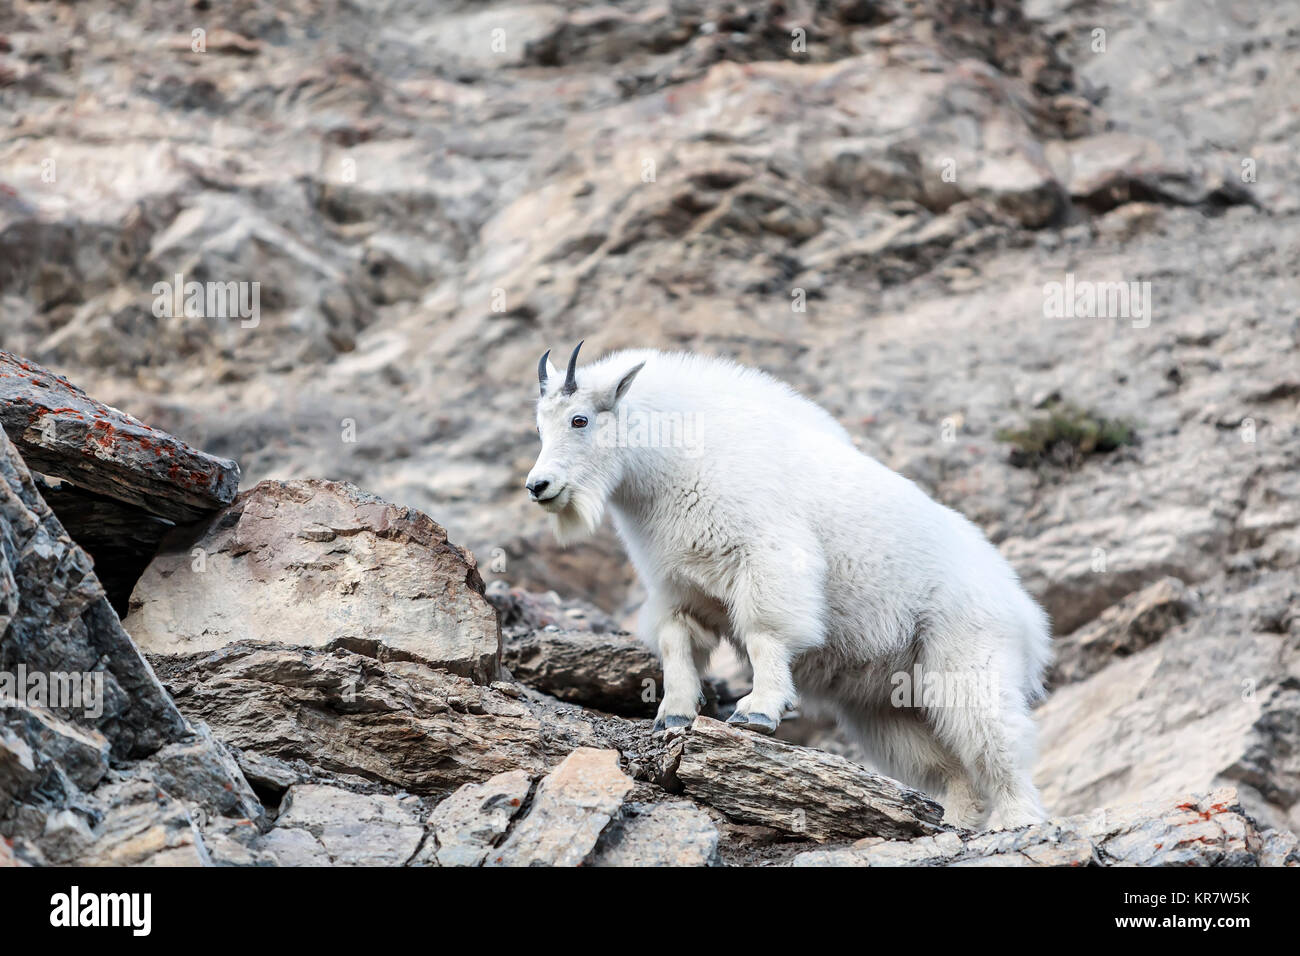 Mountain Goat standing on rocks, Jasper National Park, Alberta, Canada. Stock Photo